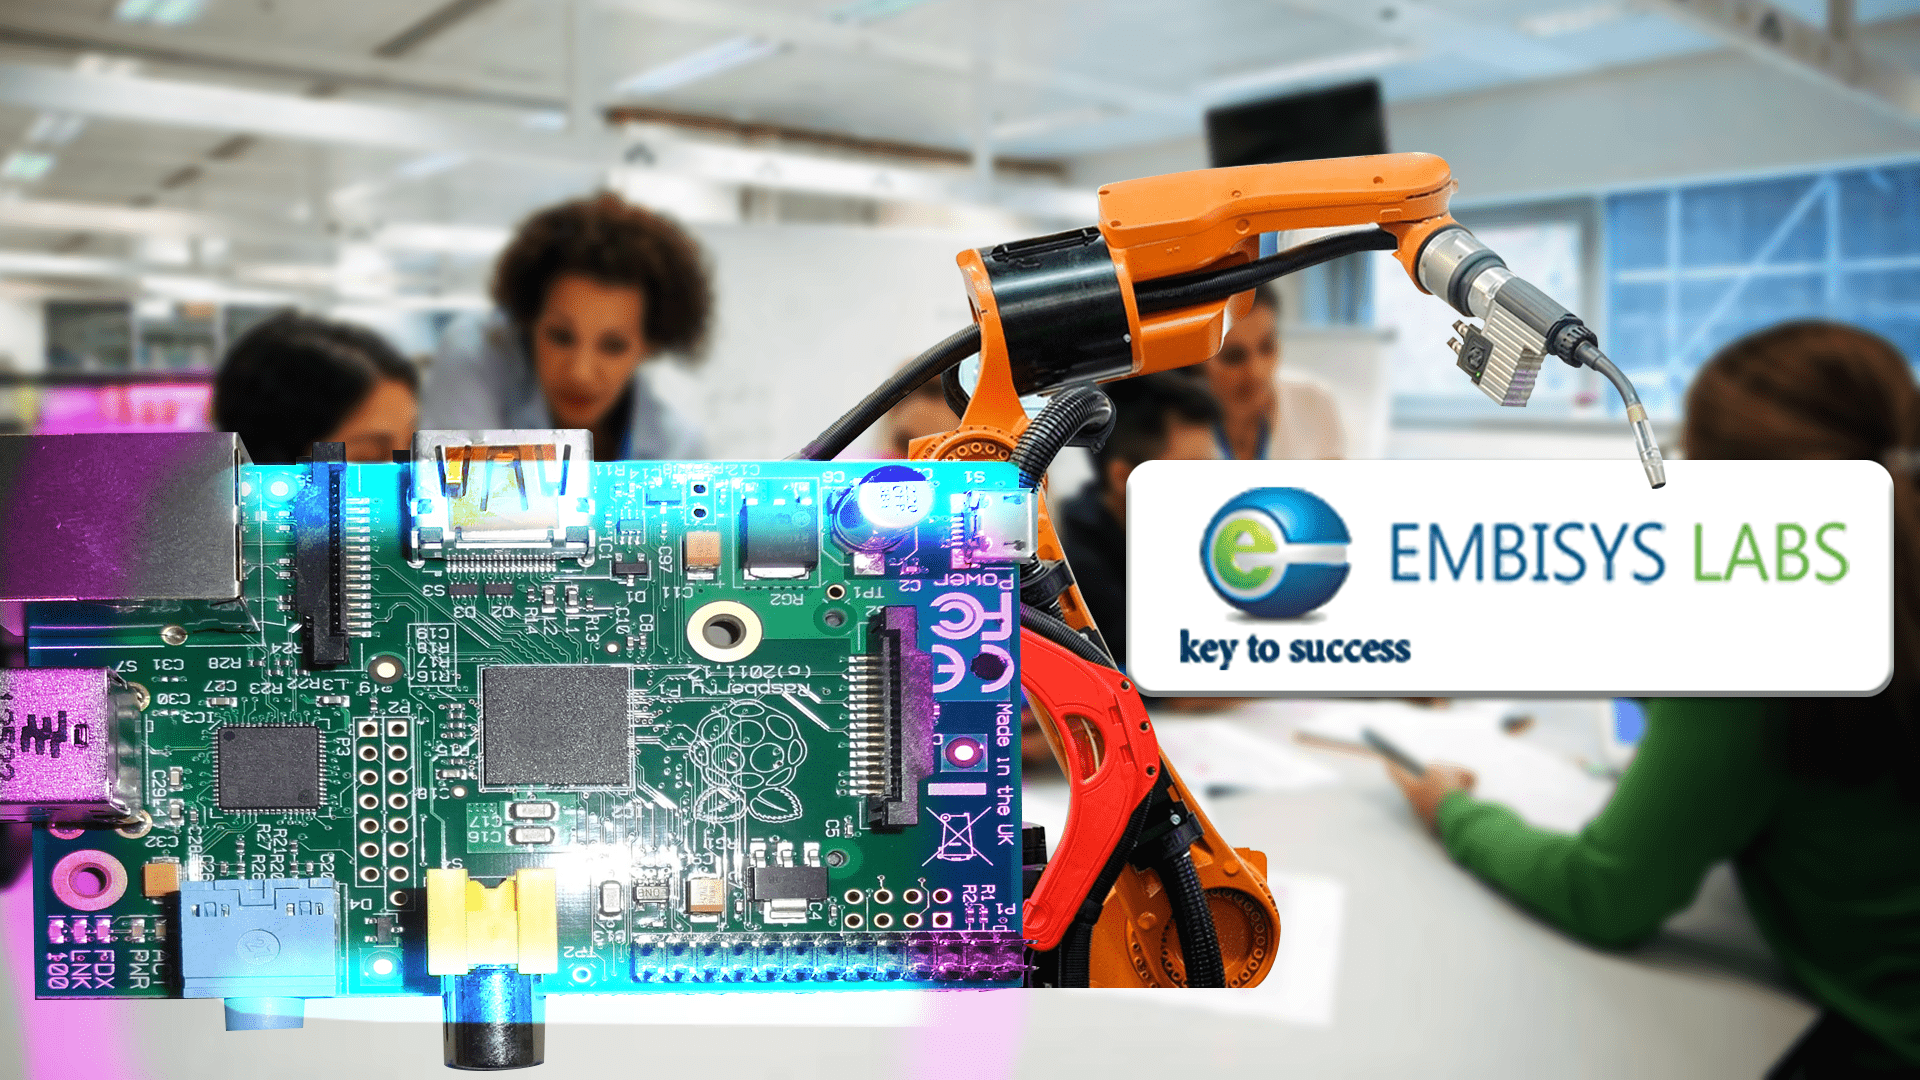 Embedded System Training